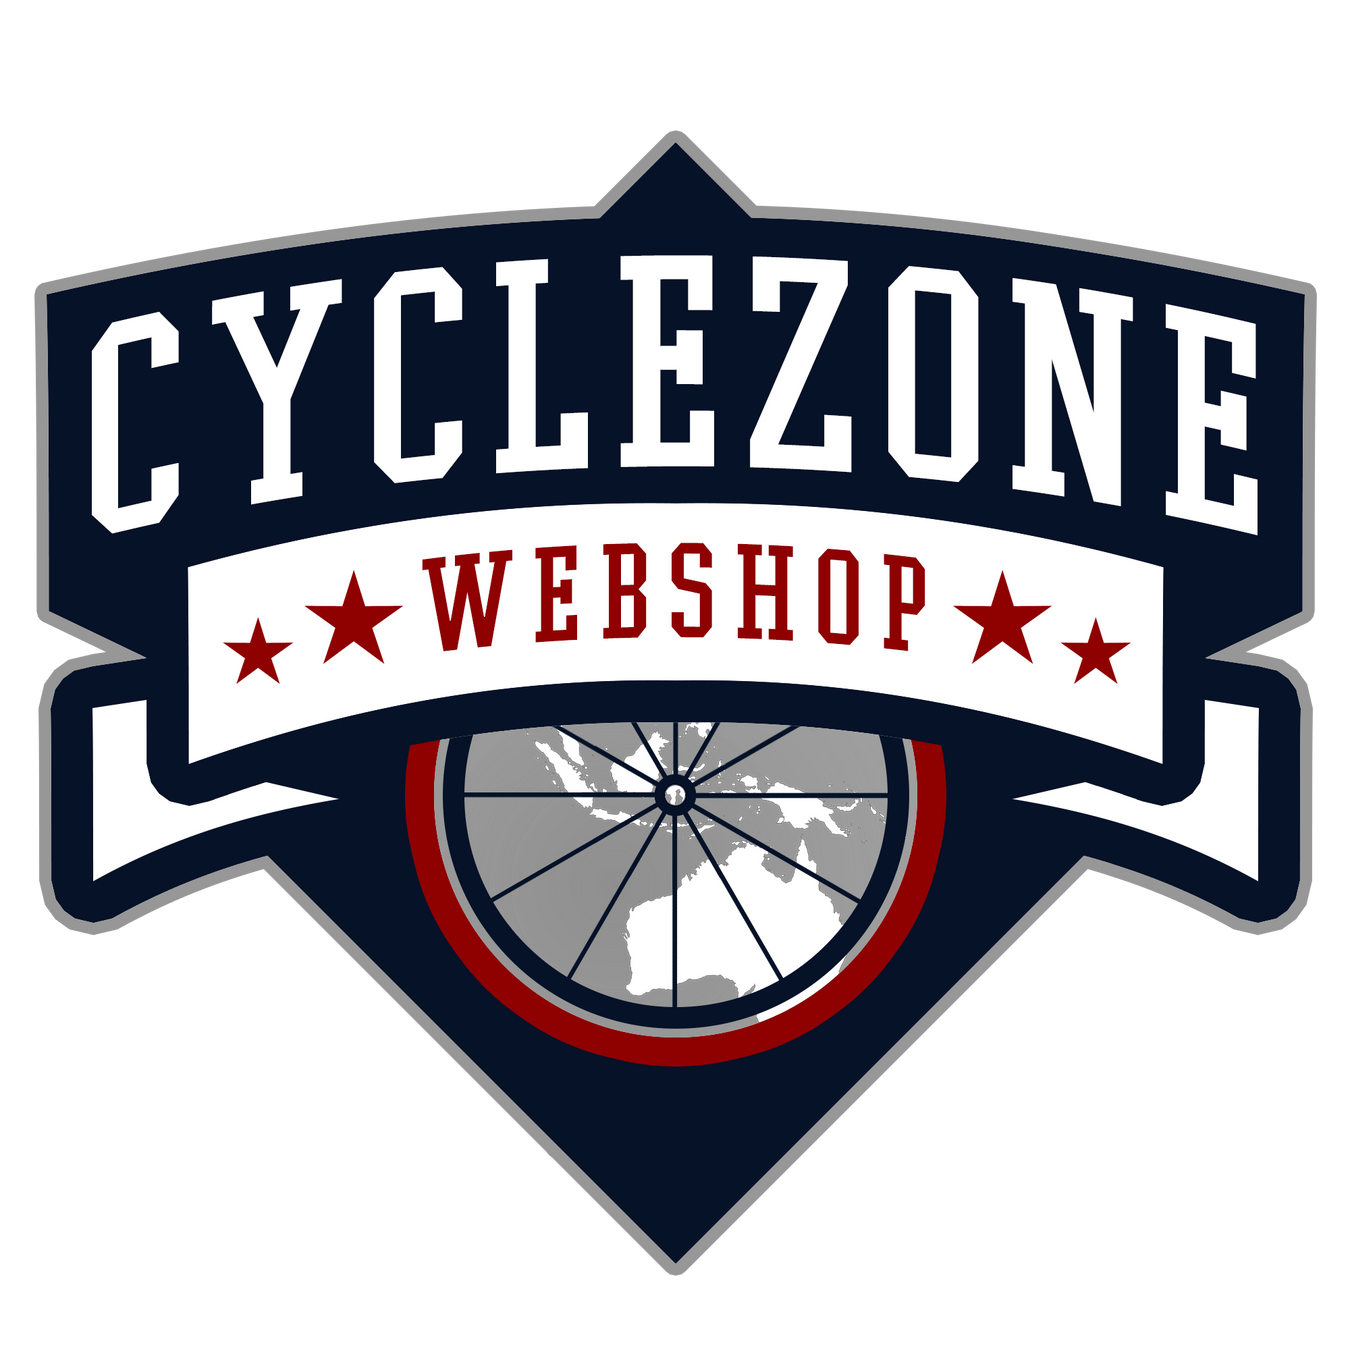 Cyclezone Online